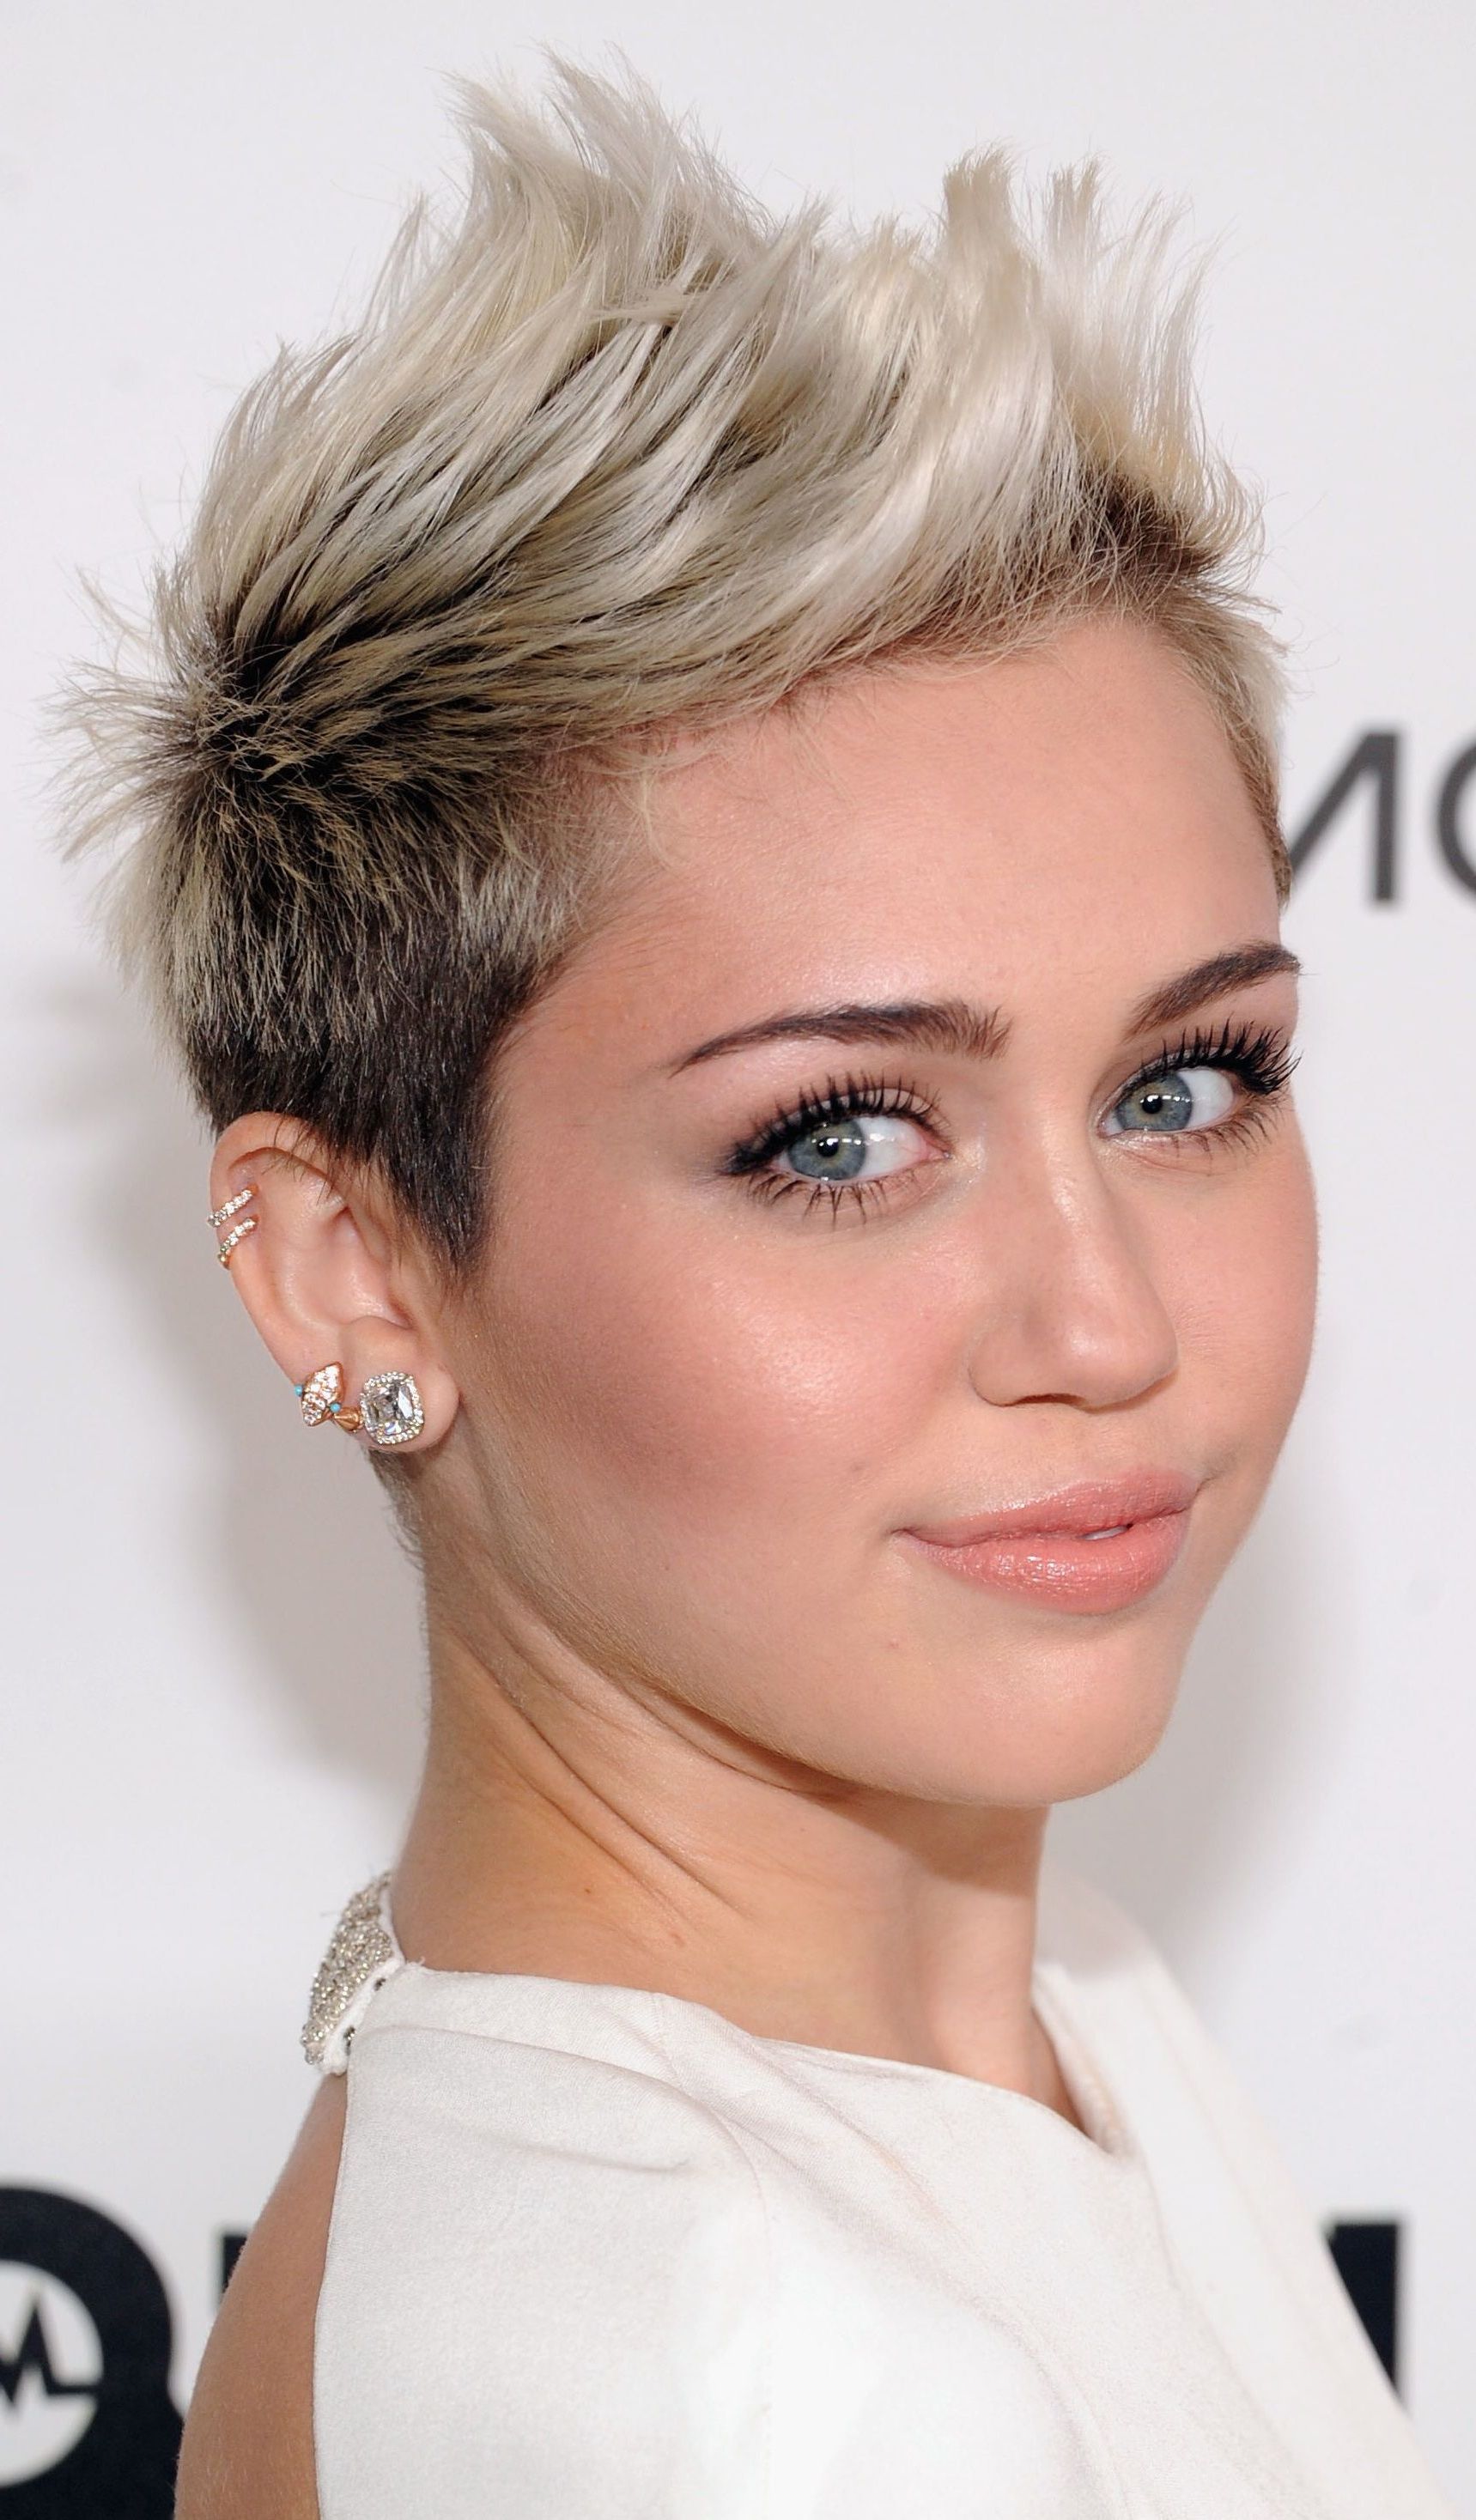 Miley Cyrus: Platinum Blonde Ombre Short Hairstyle In 2018 | Hair Within Miley Cyrus Short Hairstyles (Photo 7 of 25)